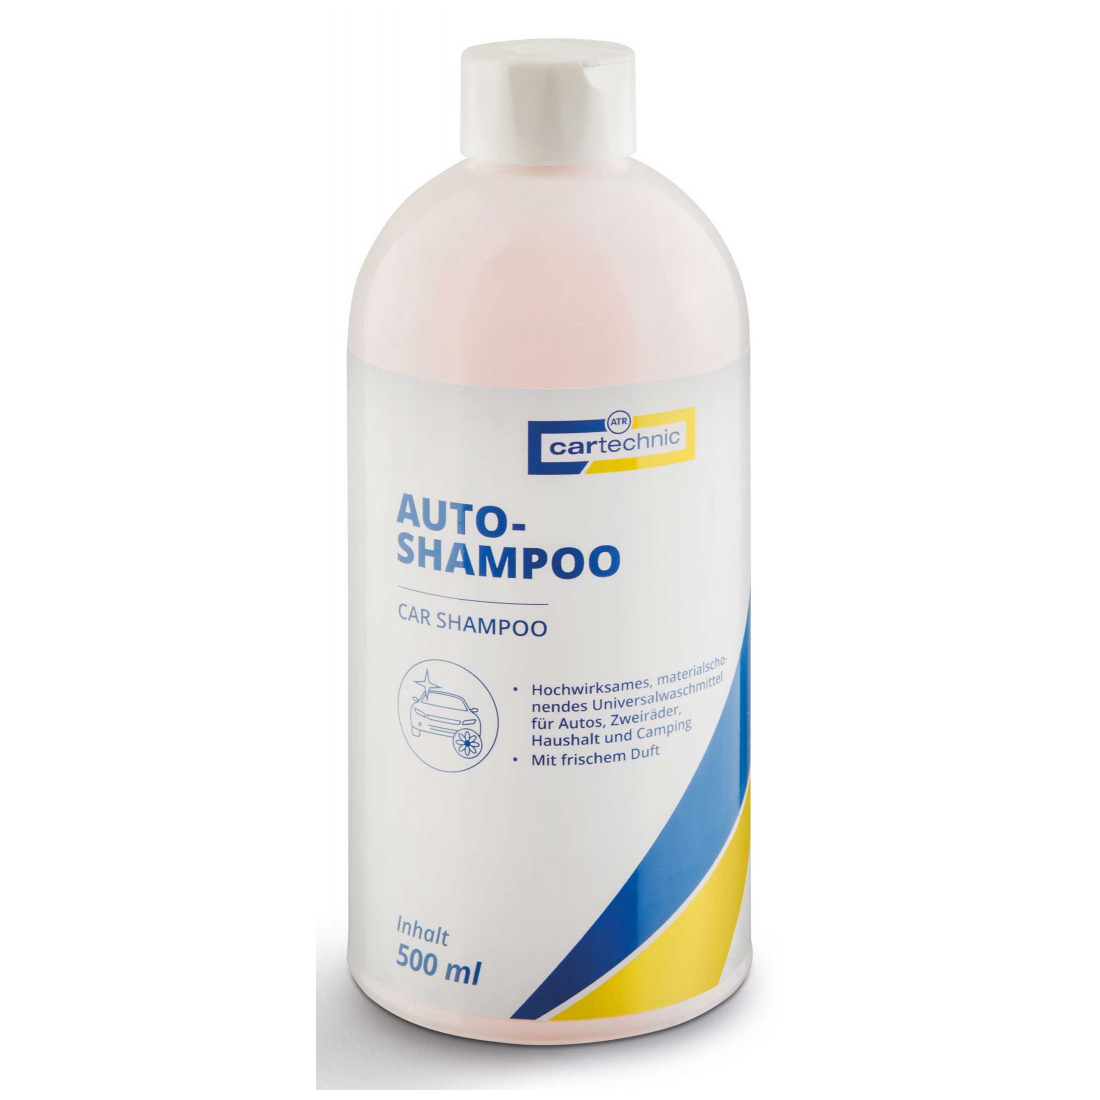 Cartechnic Auto-Shampoo 500 ml 40 27289 00463 1